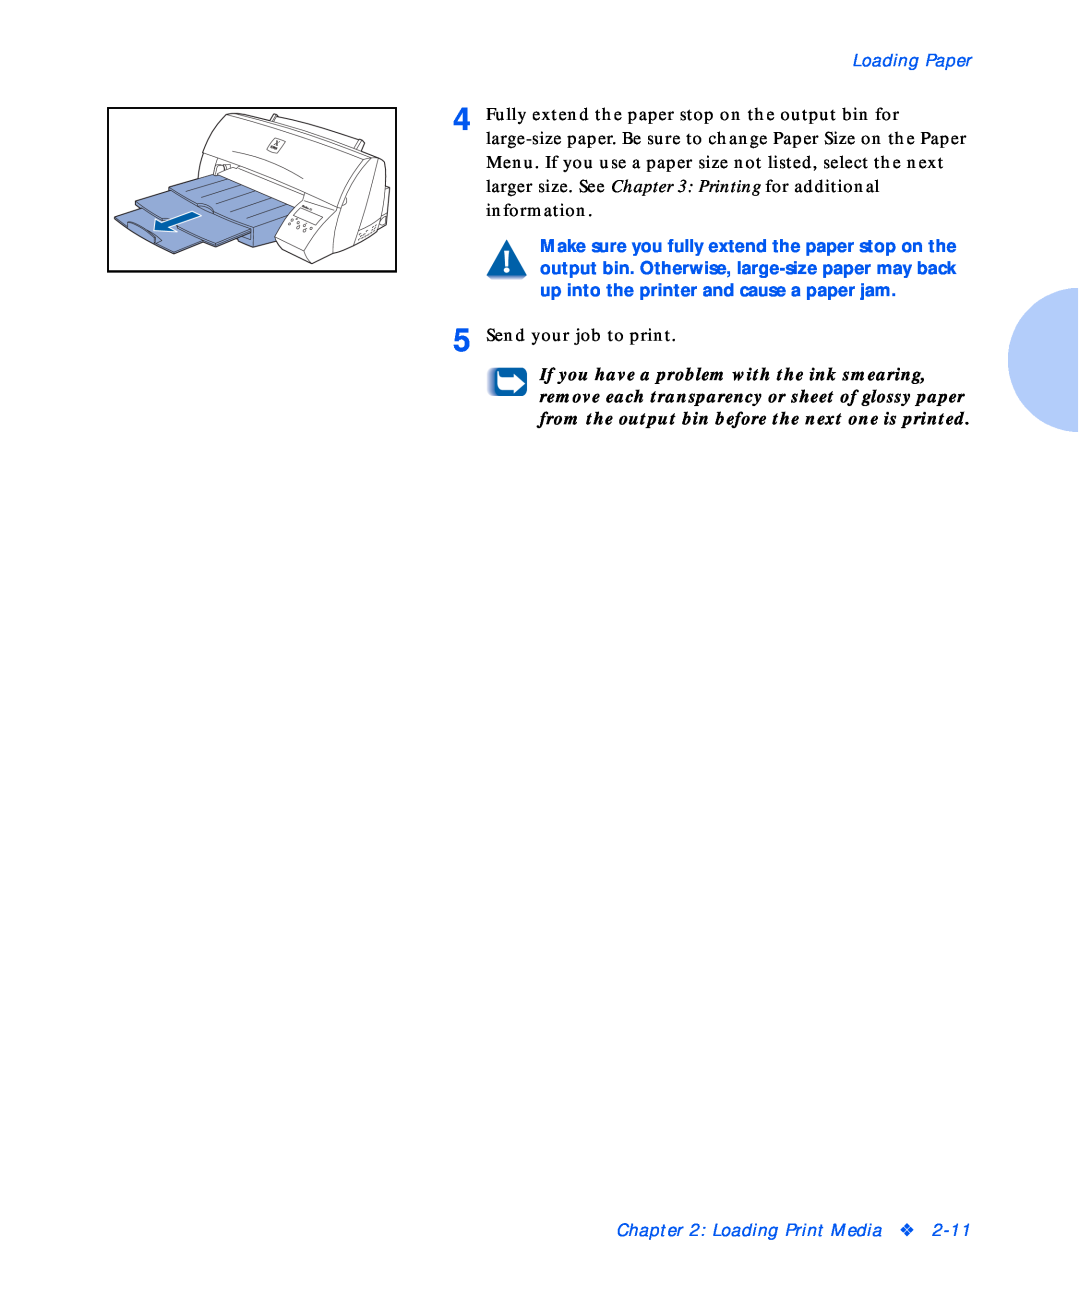 Xerox NC20 manual Loading Paper, Send your job to print, Loading Print Media 